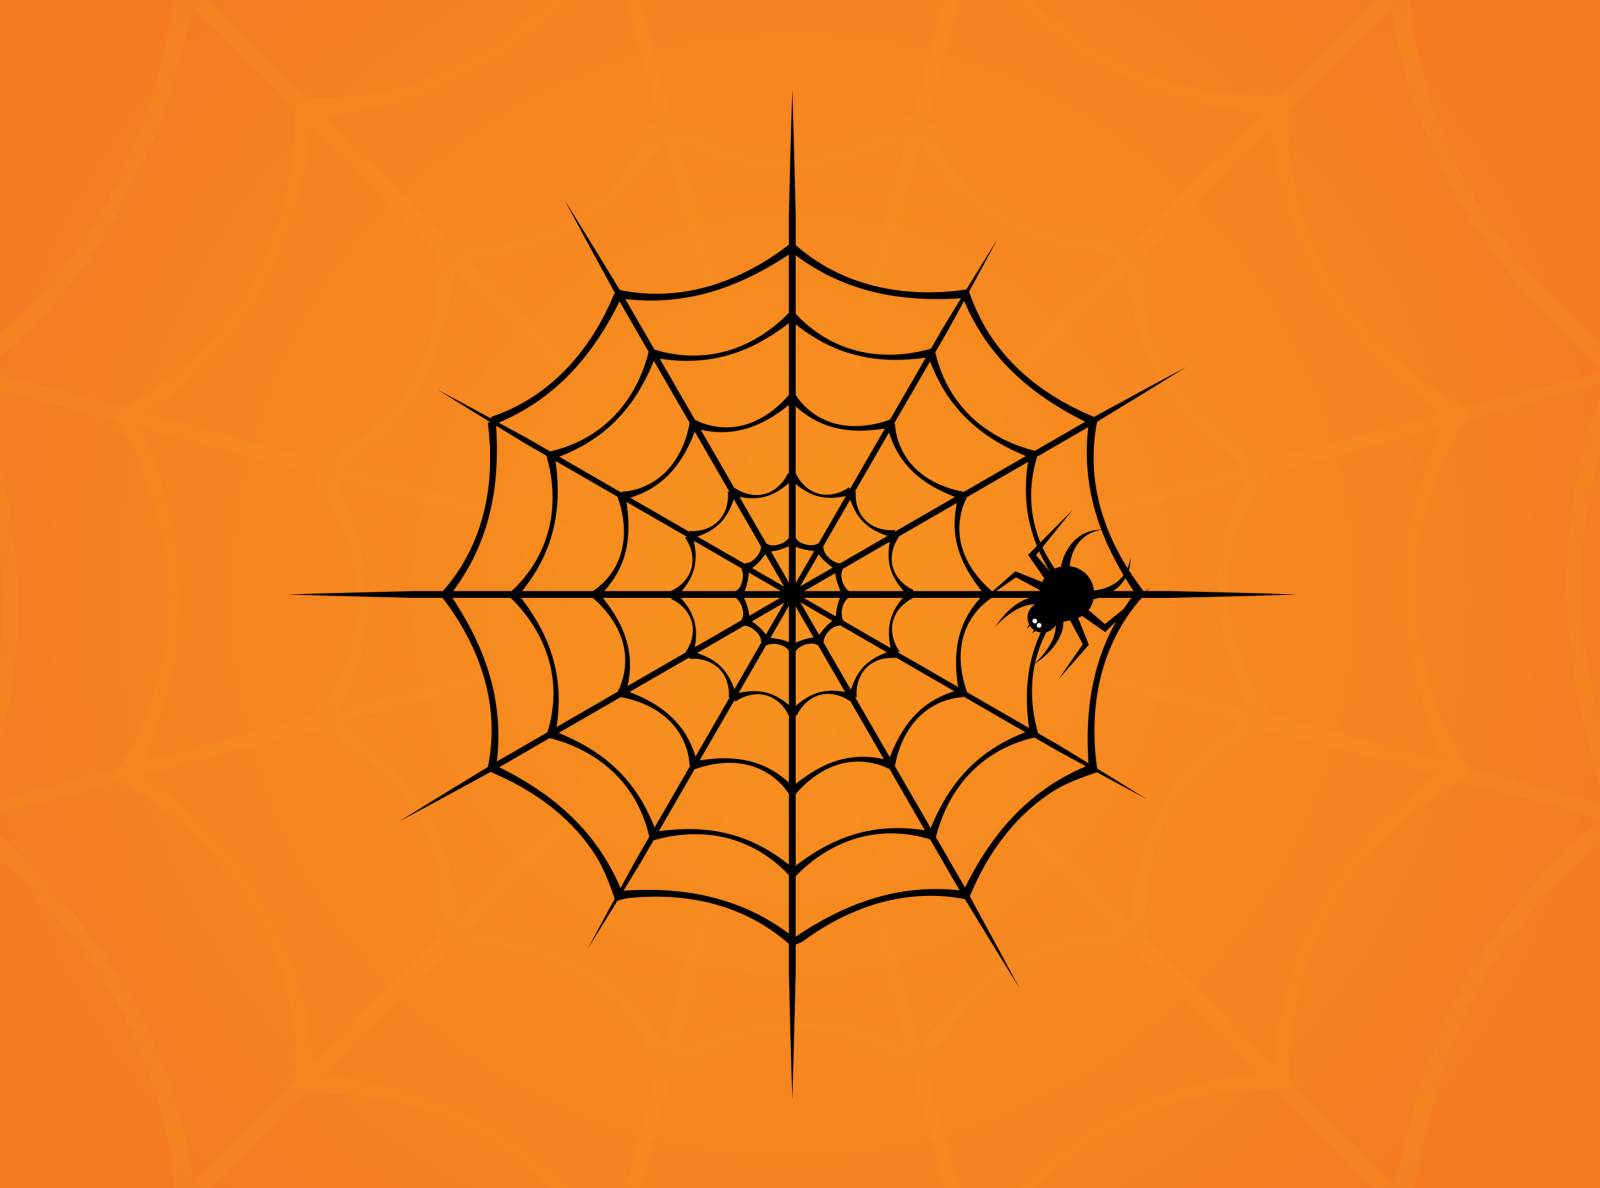 Halloween Spiders Web in Adobe Illustrator by Richard Carpenter on Dribbble